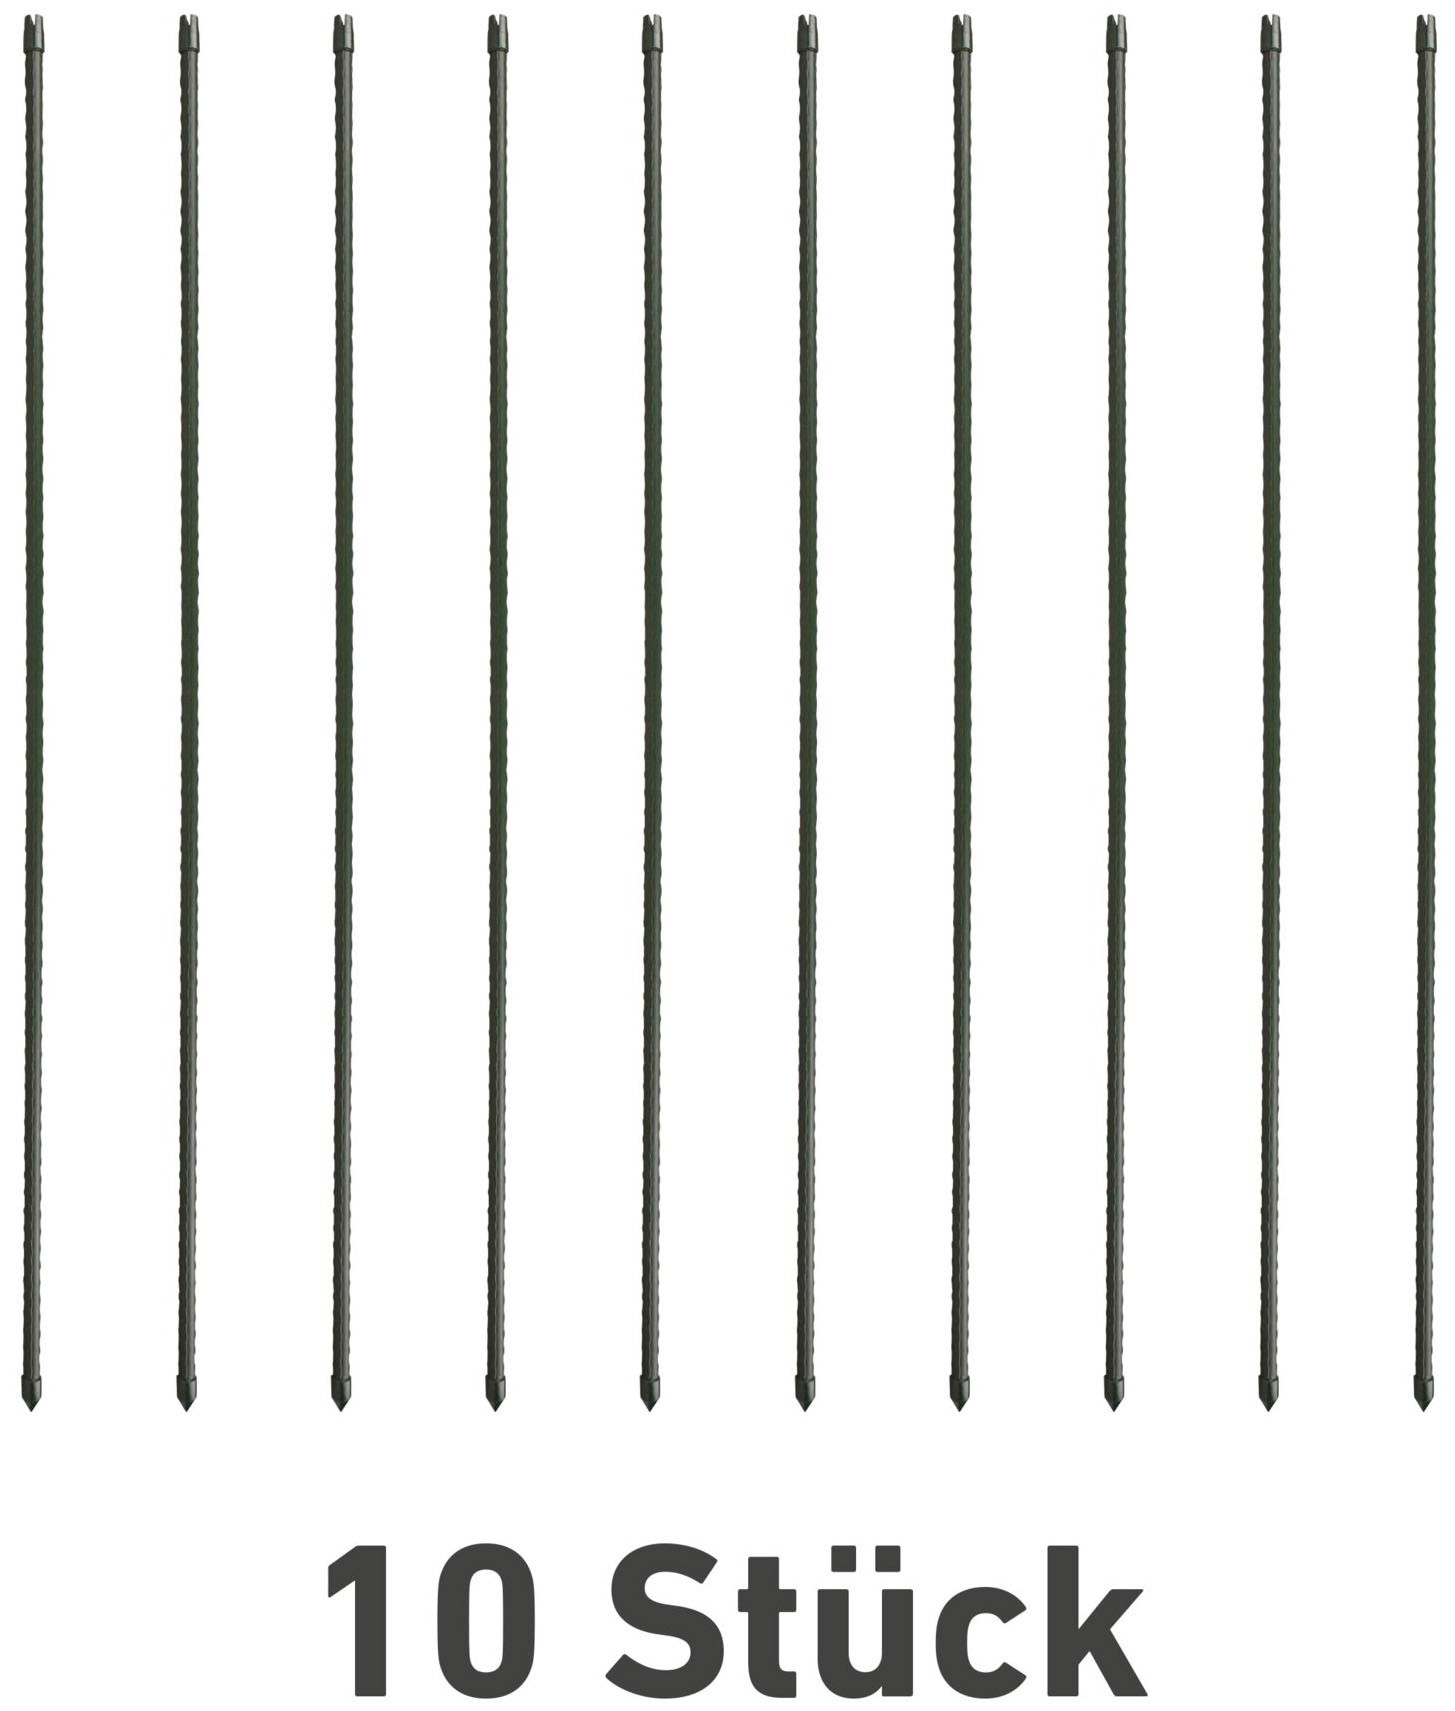 Windhager Stahl-Pflanzstab SET, Stahl-Rankstab, Pflanzenstütze, Rankhilfe, Pflanzstäbe, Tomatenstäbe, Grün, 10 Stück, 180 cm, 89119